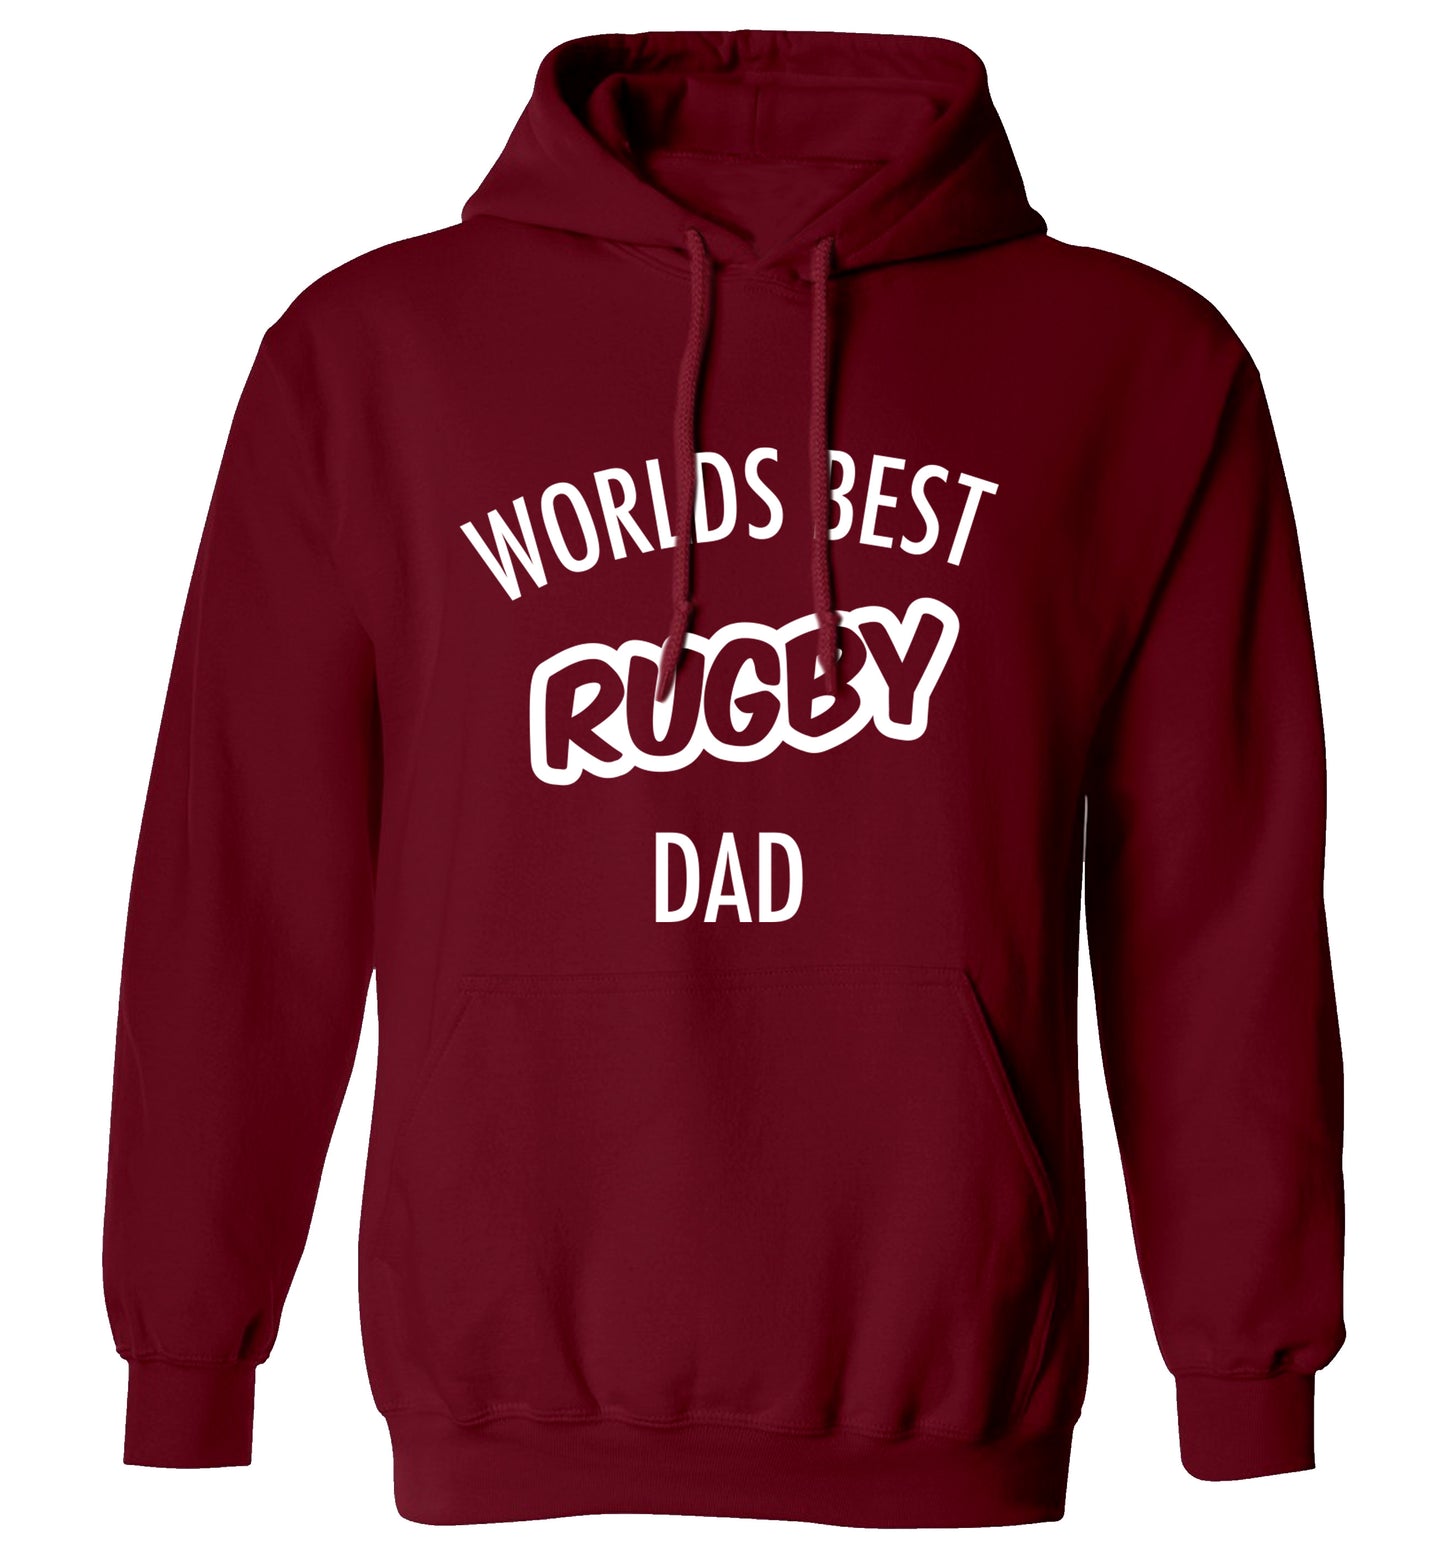 Worlds best rugby dad adults unisex maroon hoodie 2XL